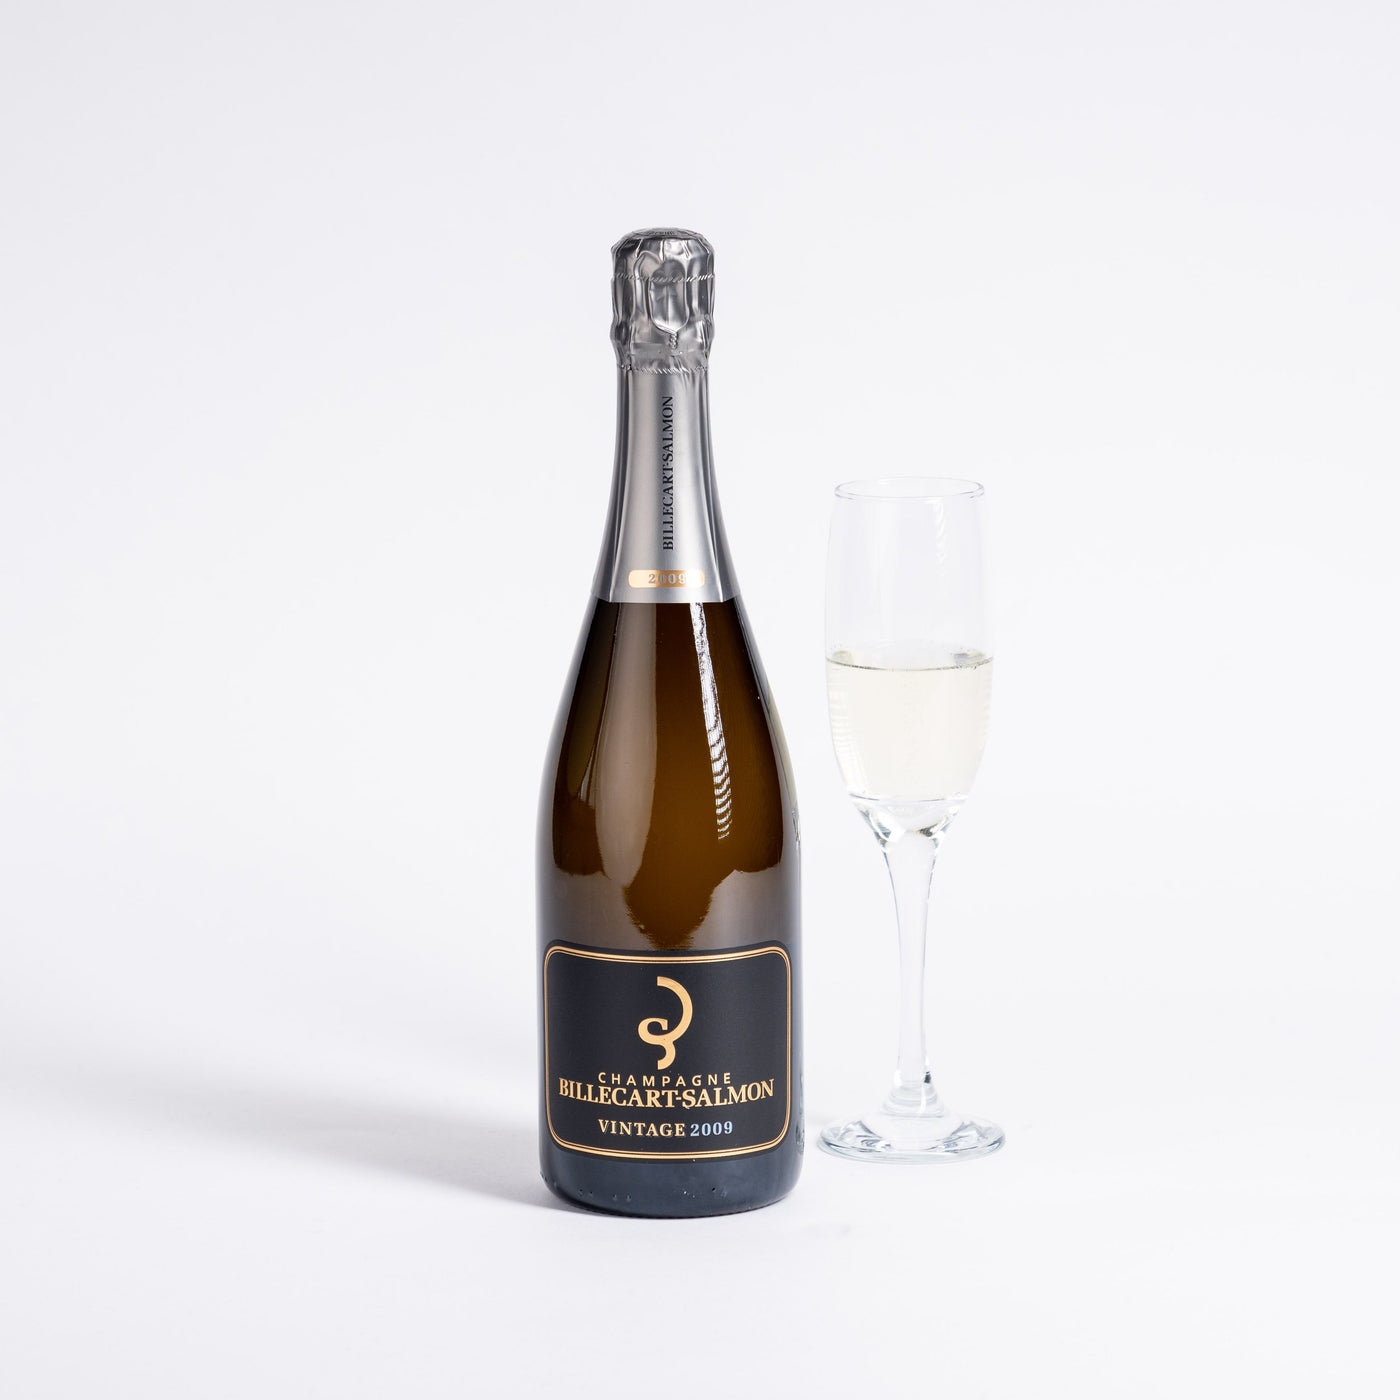 Billecart-Salmon Vintage 2013 Champagne